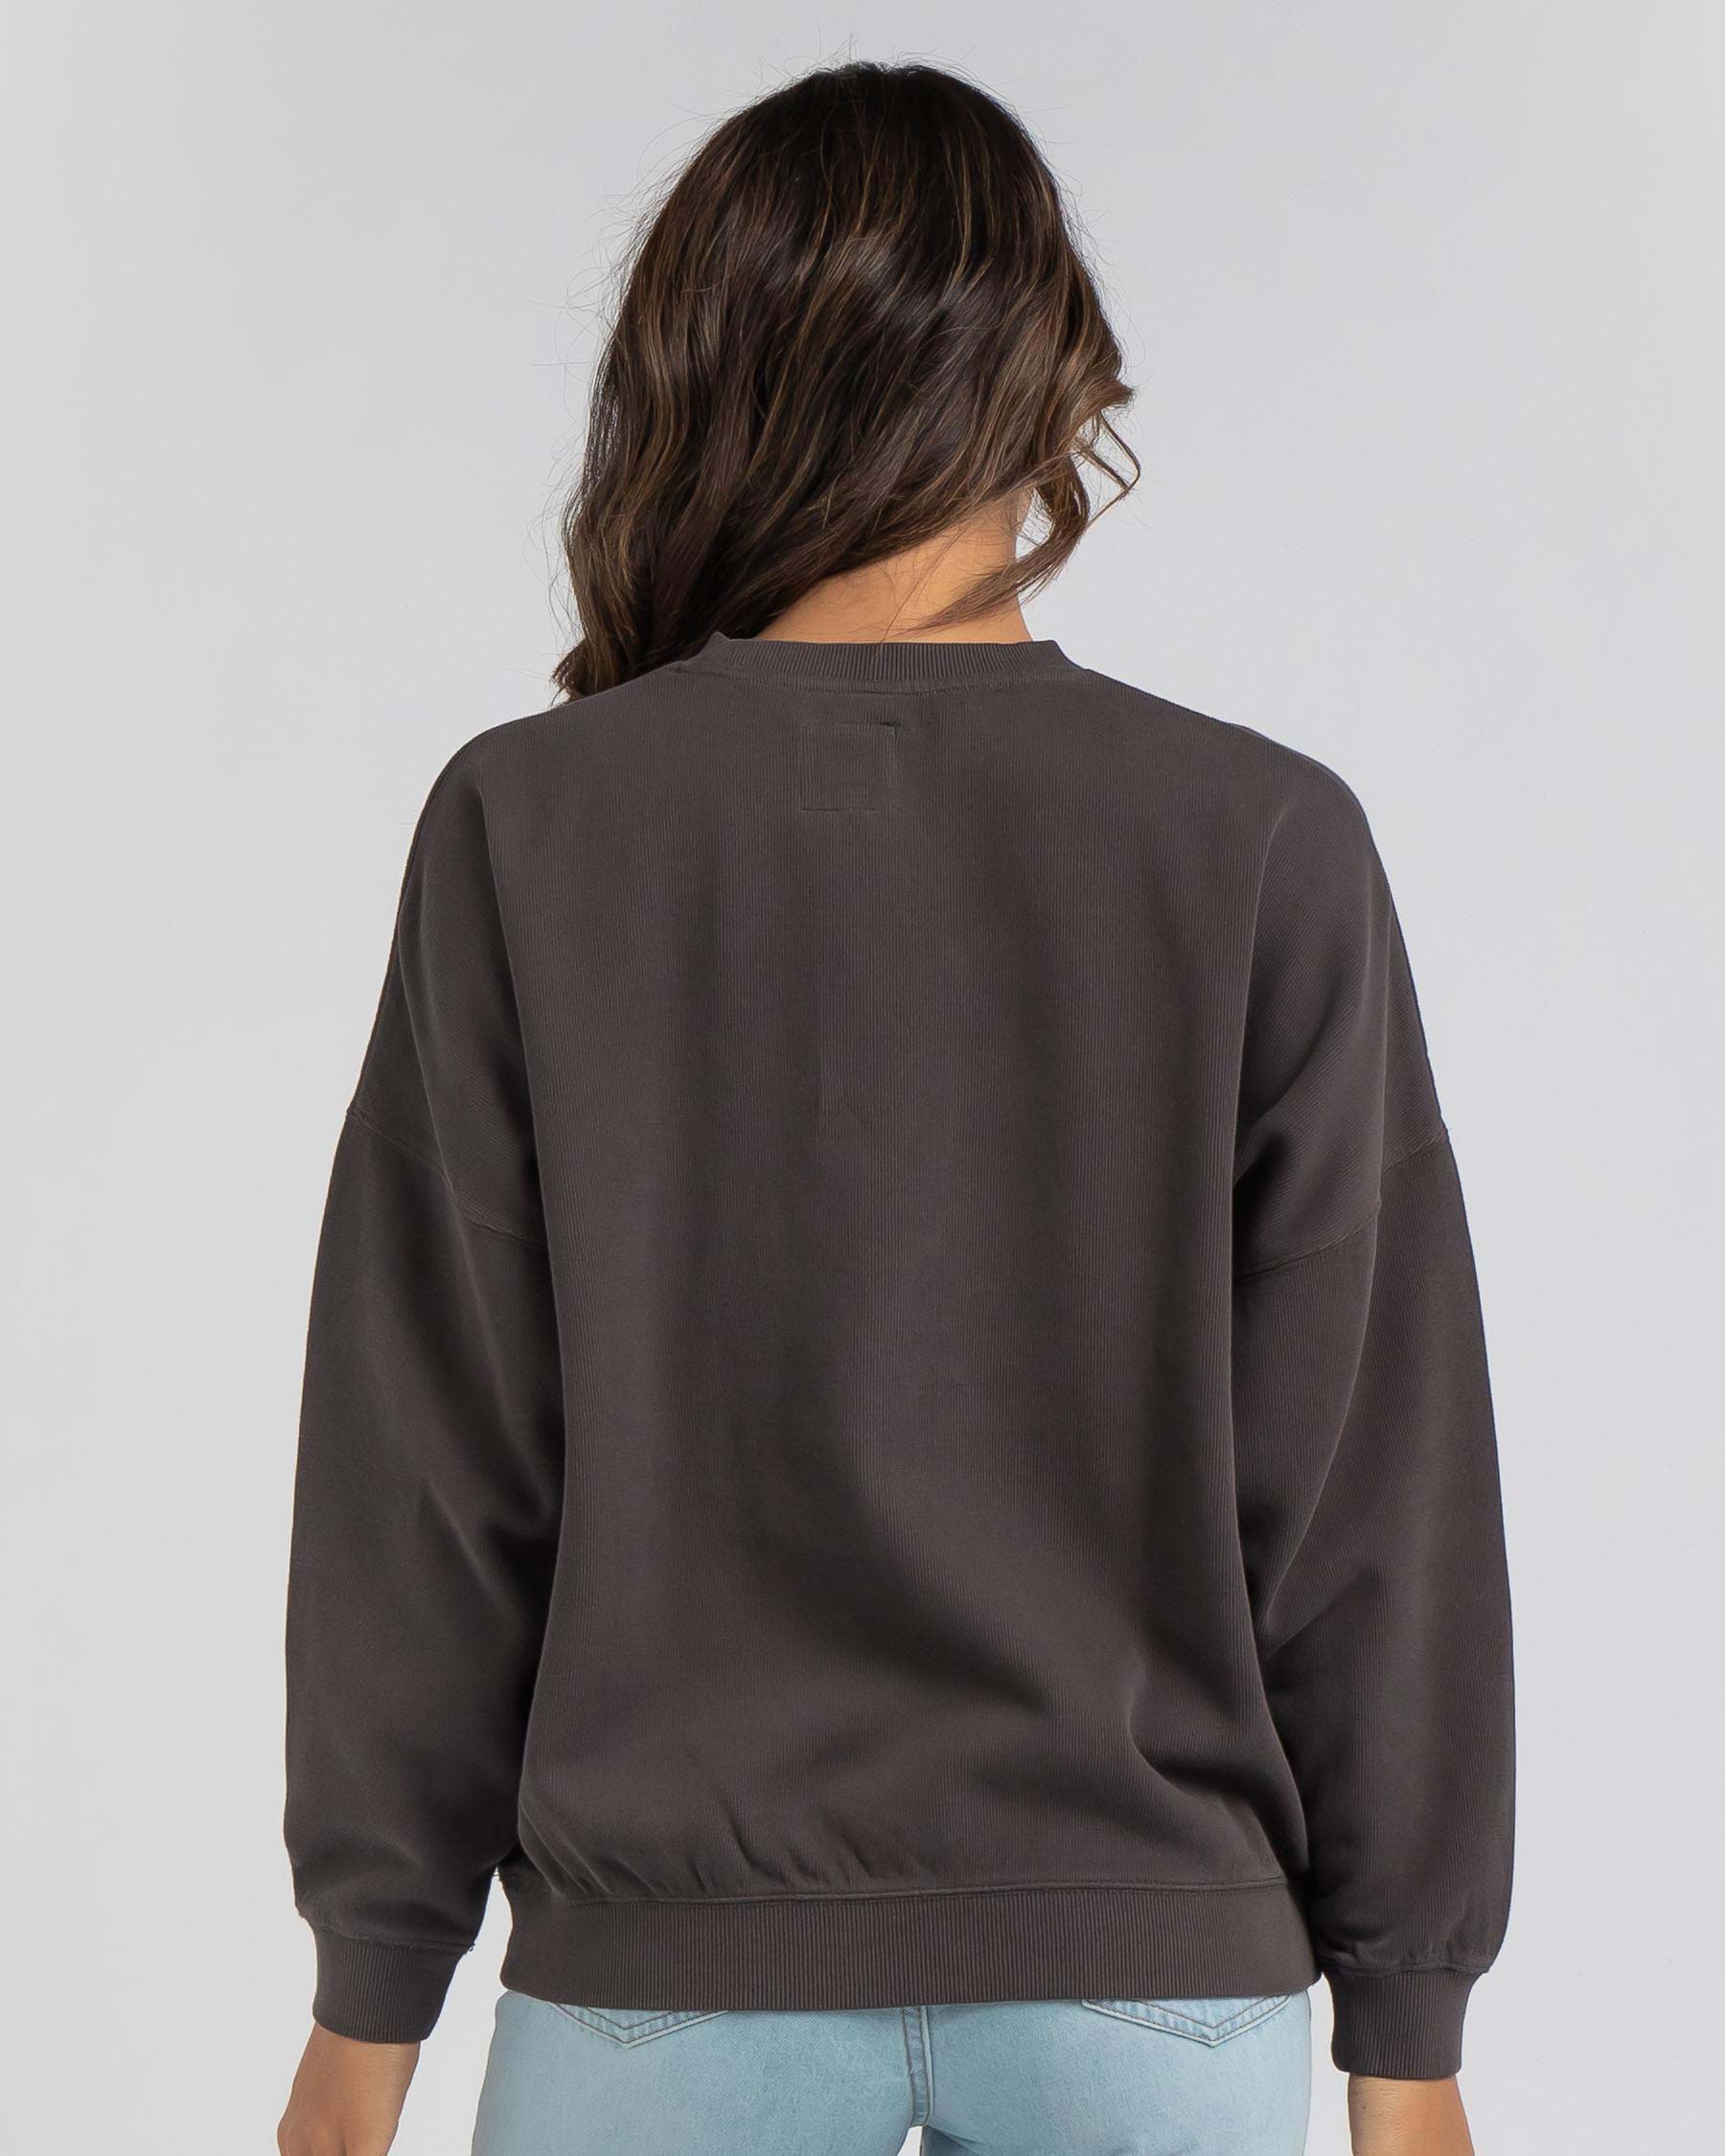 Billabong Endless Summer Sweatshirt In Off Black - Fast Shipping & Easy ...